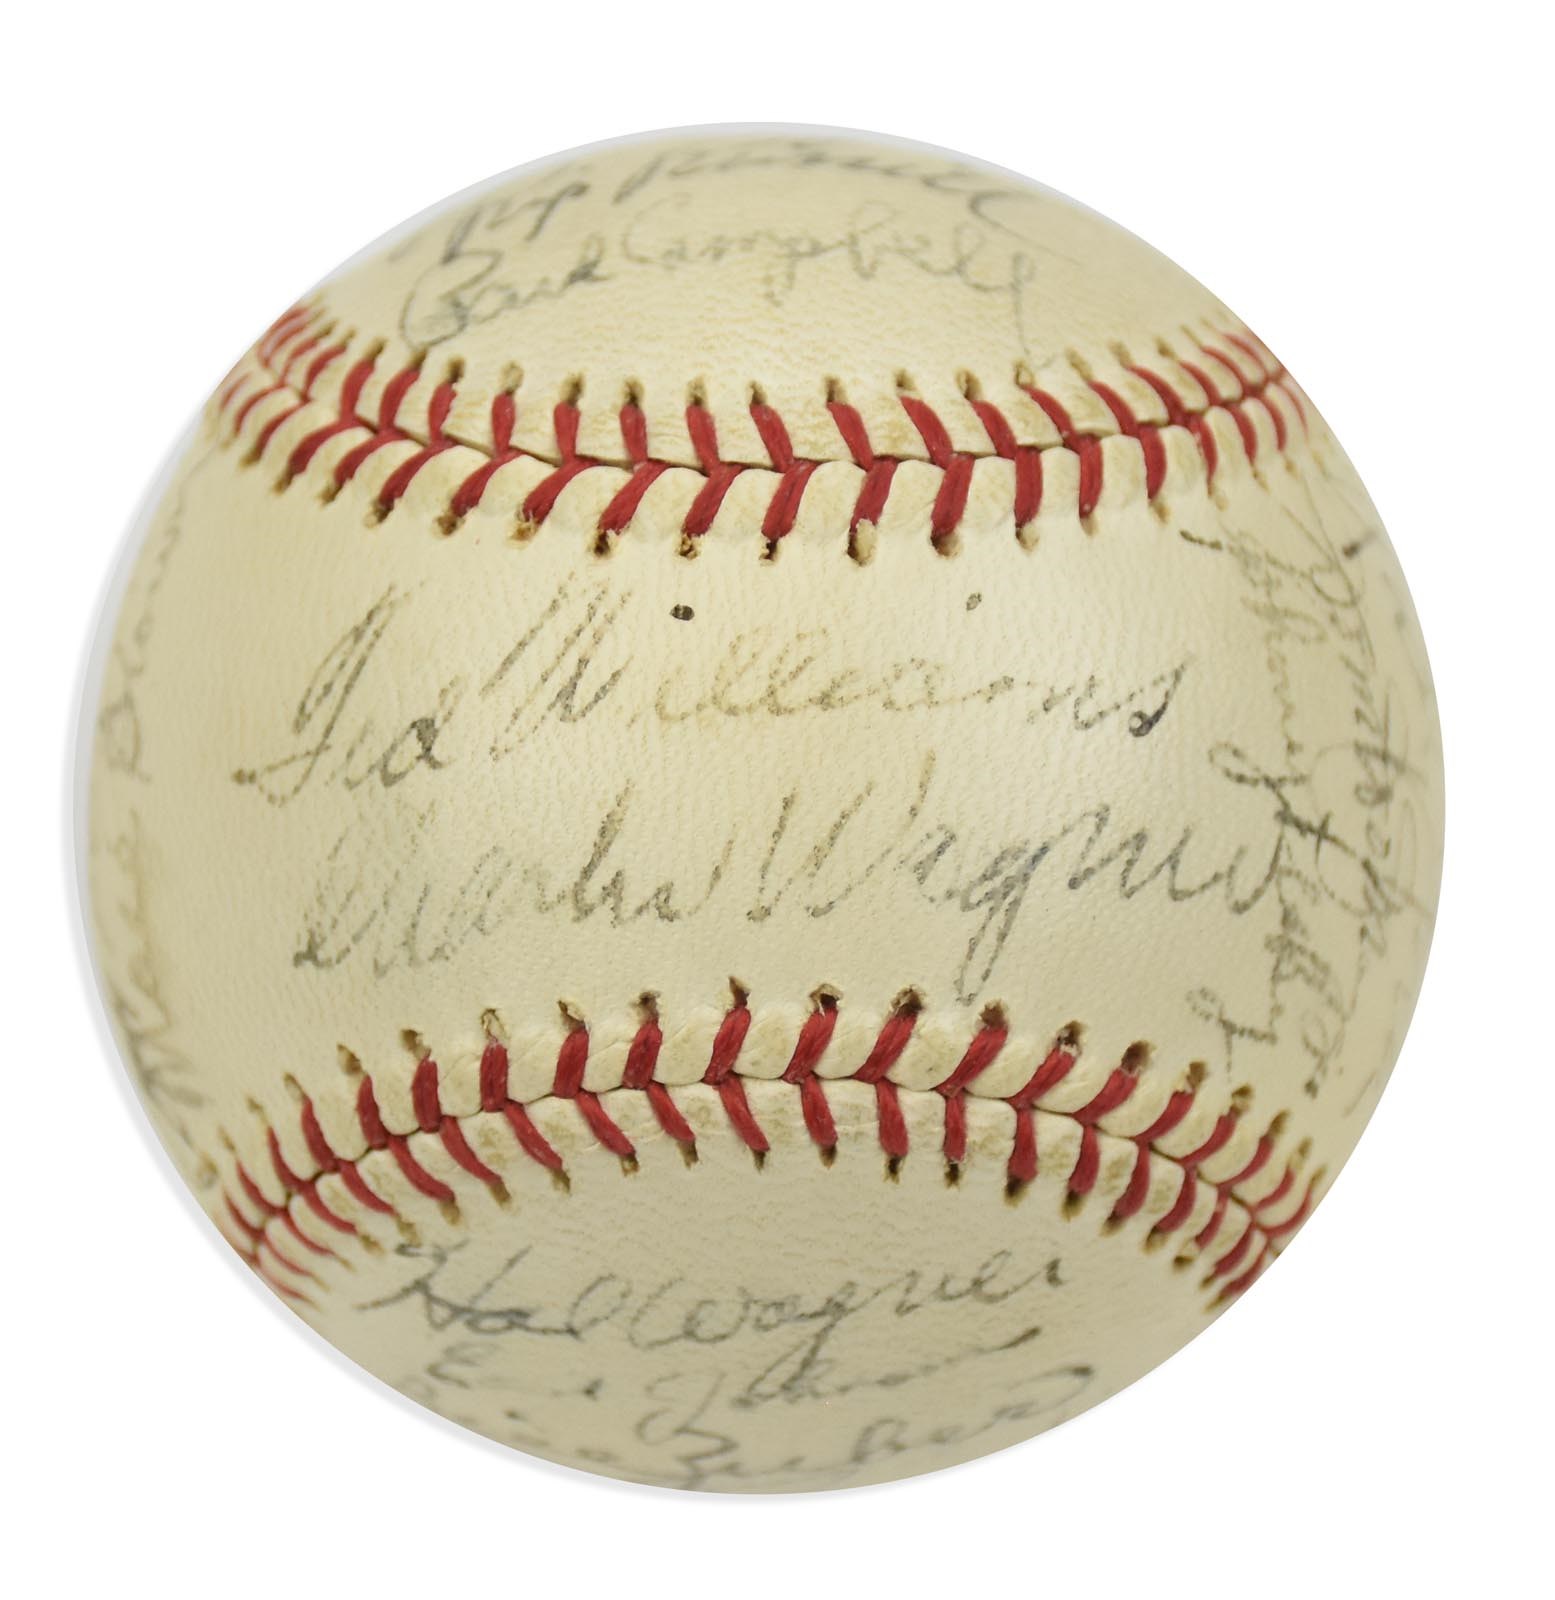 - 1946 American League Champion Boston Red Sox Team Signed Baseball (Beckett)